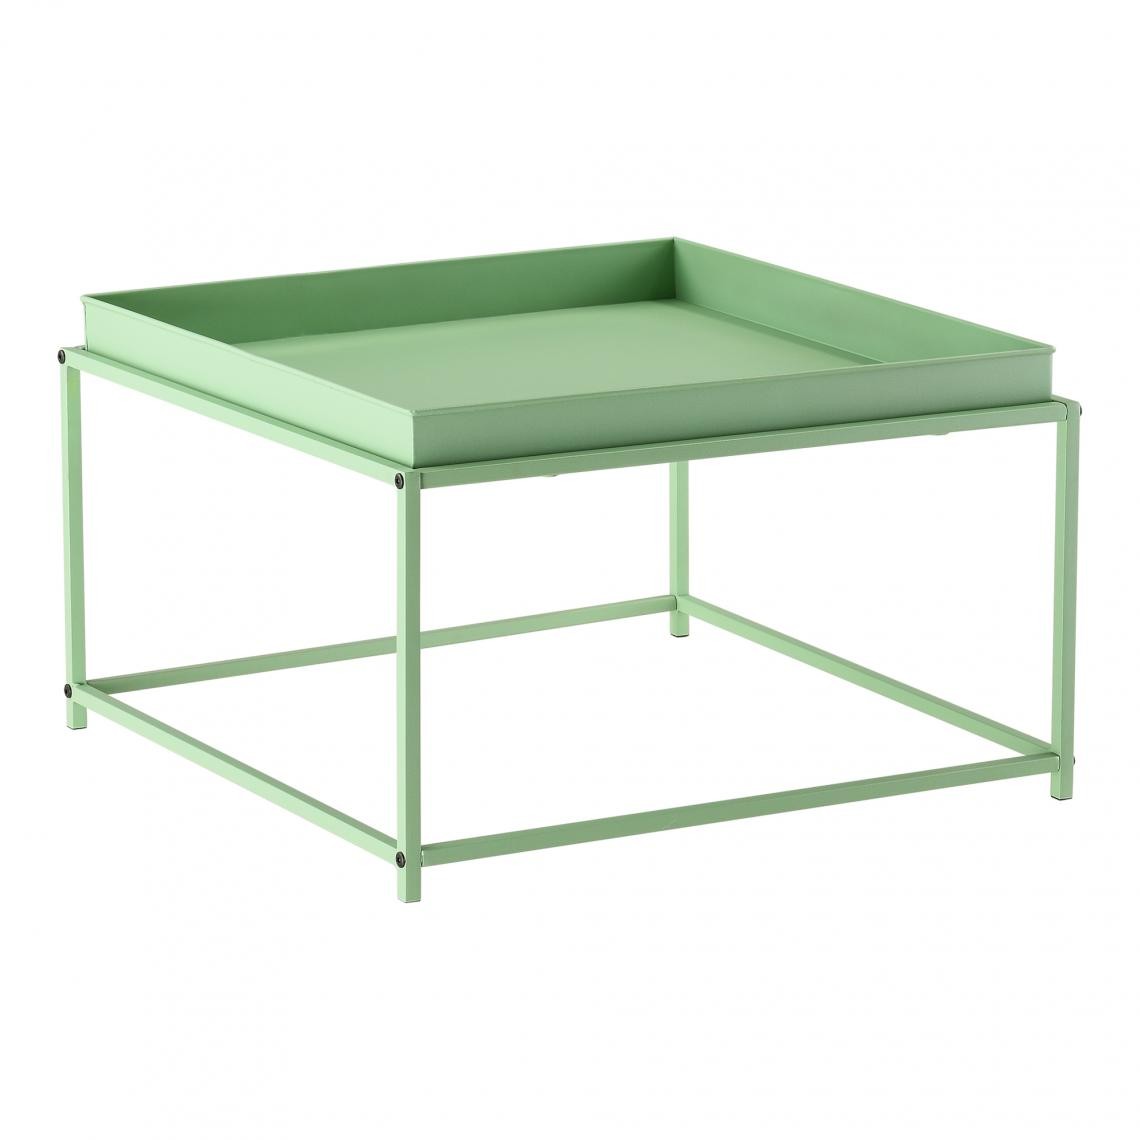 En.Casa - Table Basse avec Plateau Amovible Teltow 36 x 59 x 59 cm Vert Pastel Mat [en.casa] - Tables basses